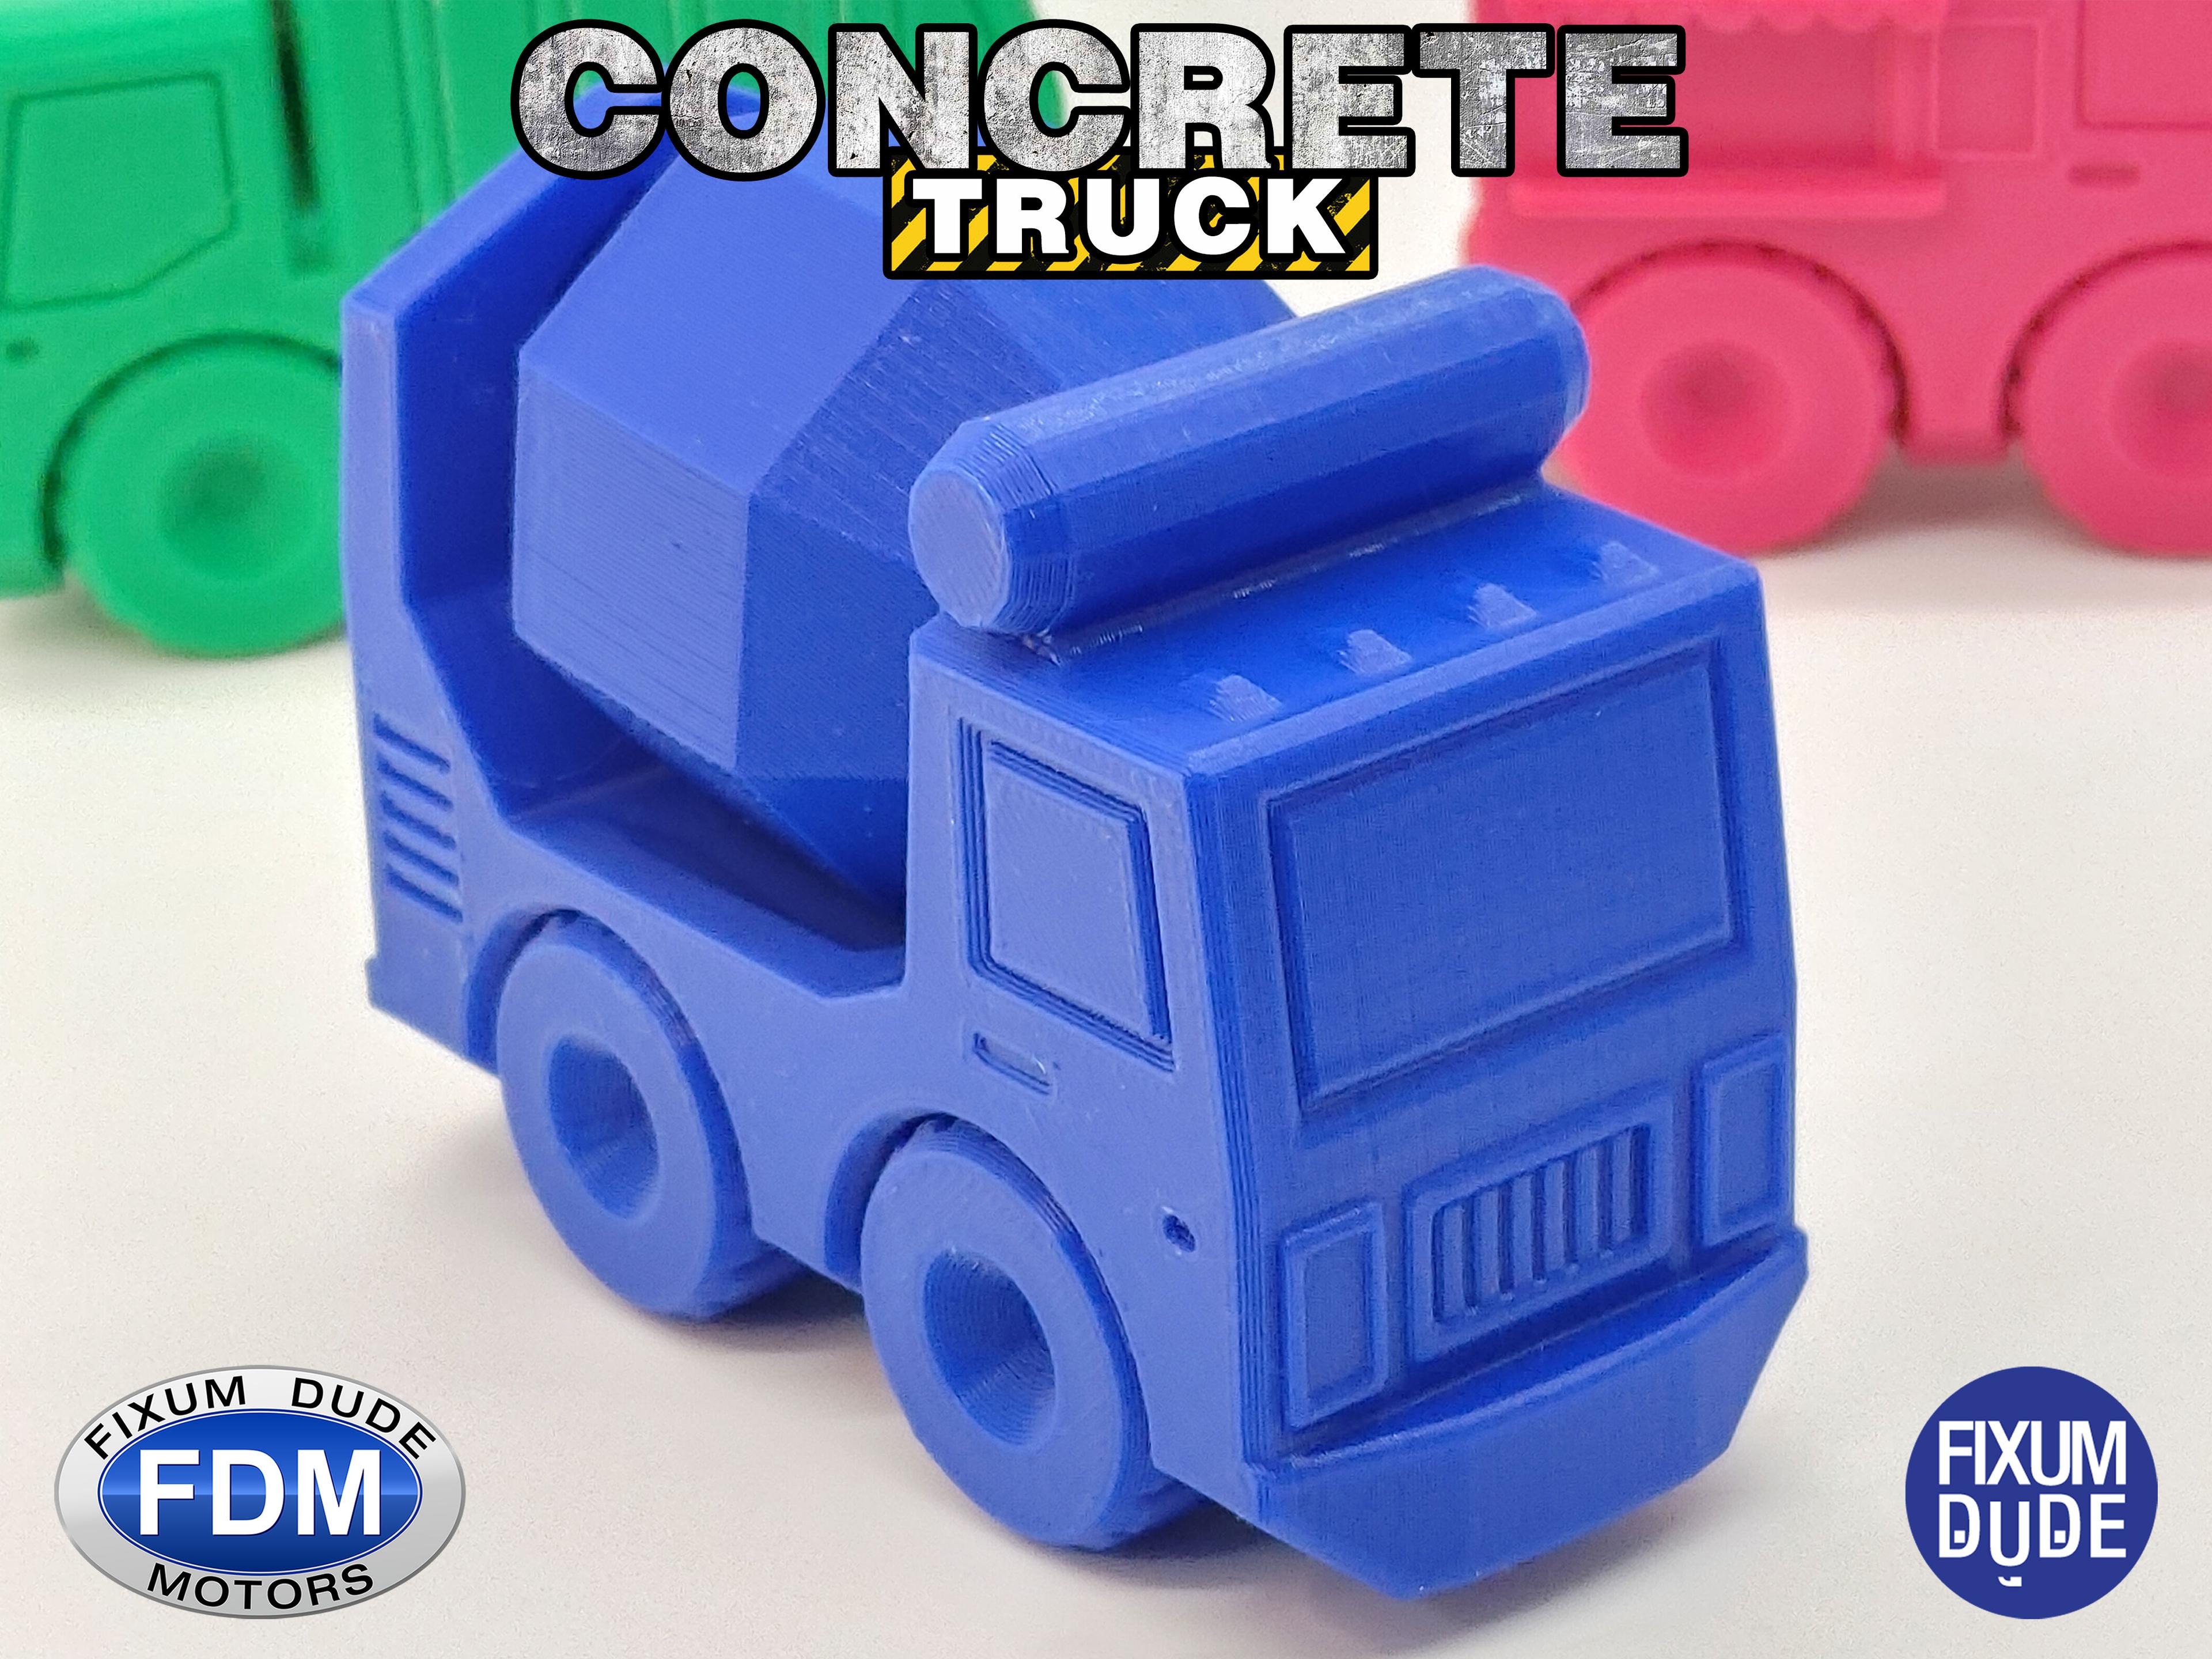 Fixum Dude Motors PiP Concrete Truck 3d model